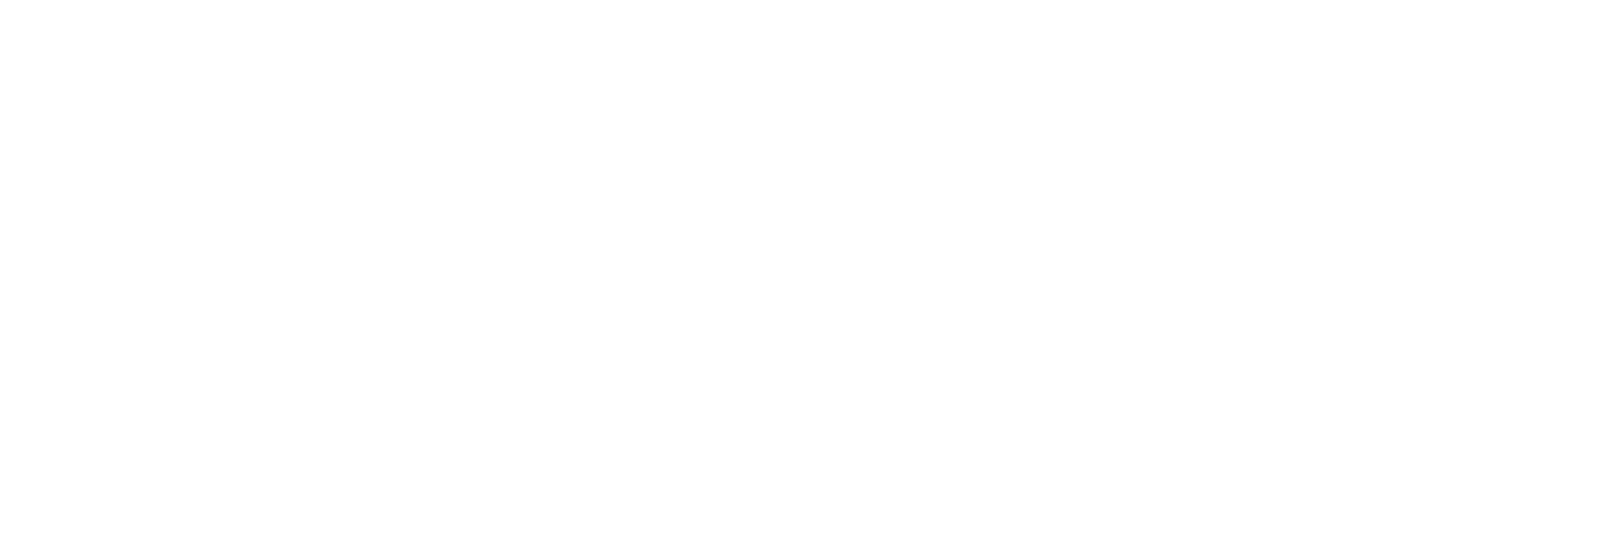 Kellogg's Logo groß für dunkle Hintergründe (transparentes PNG)